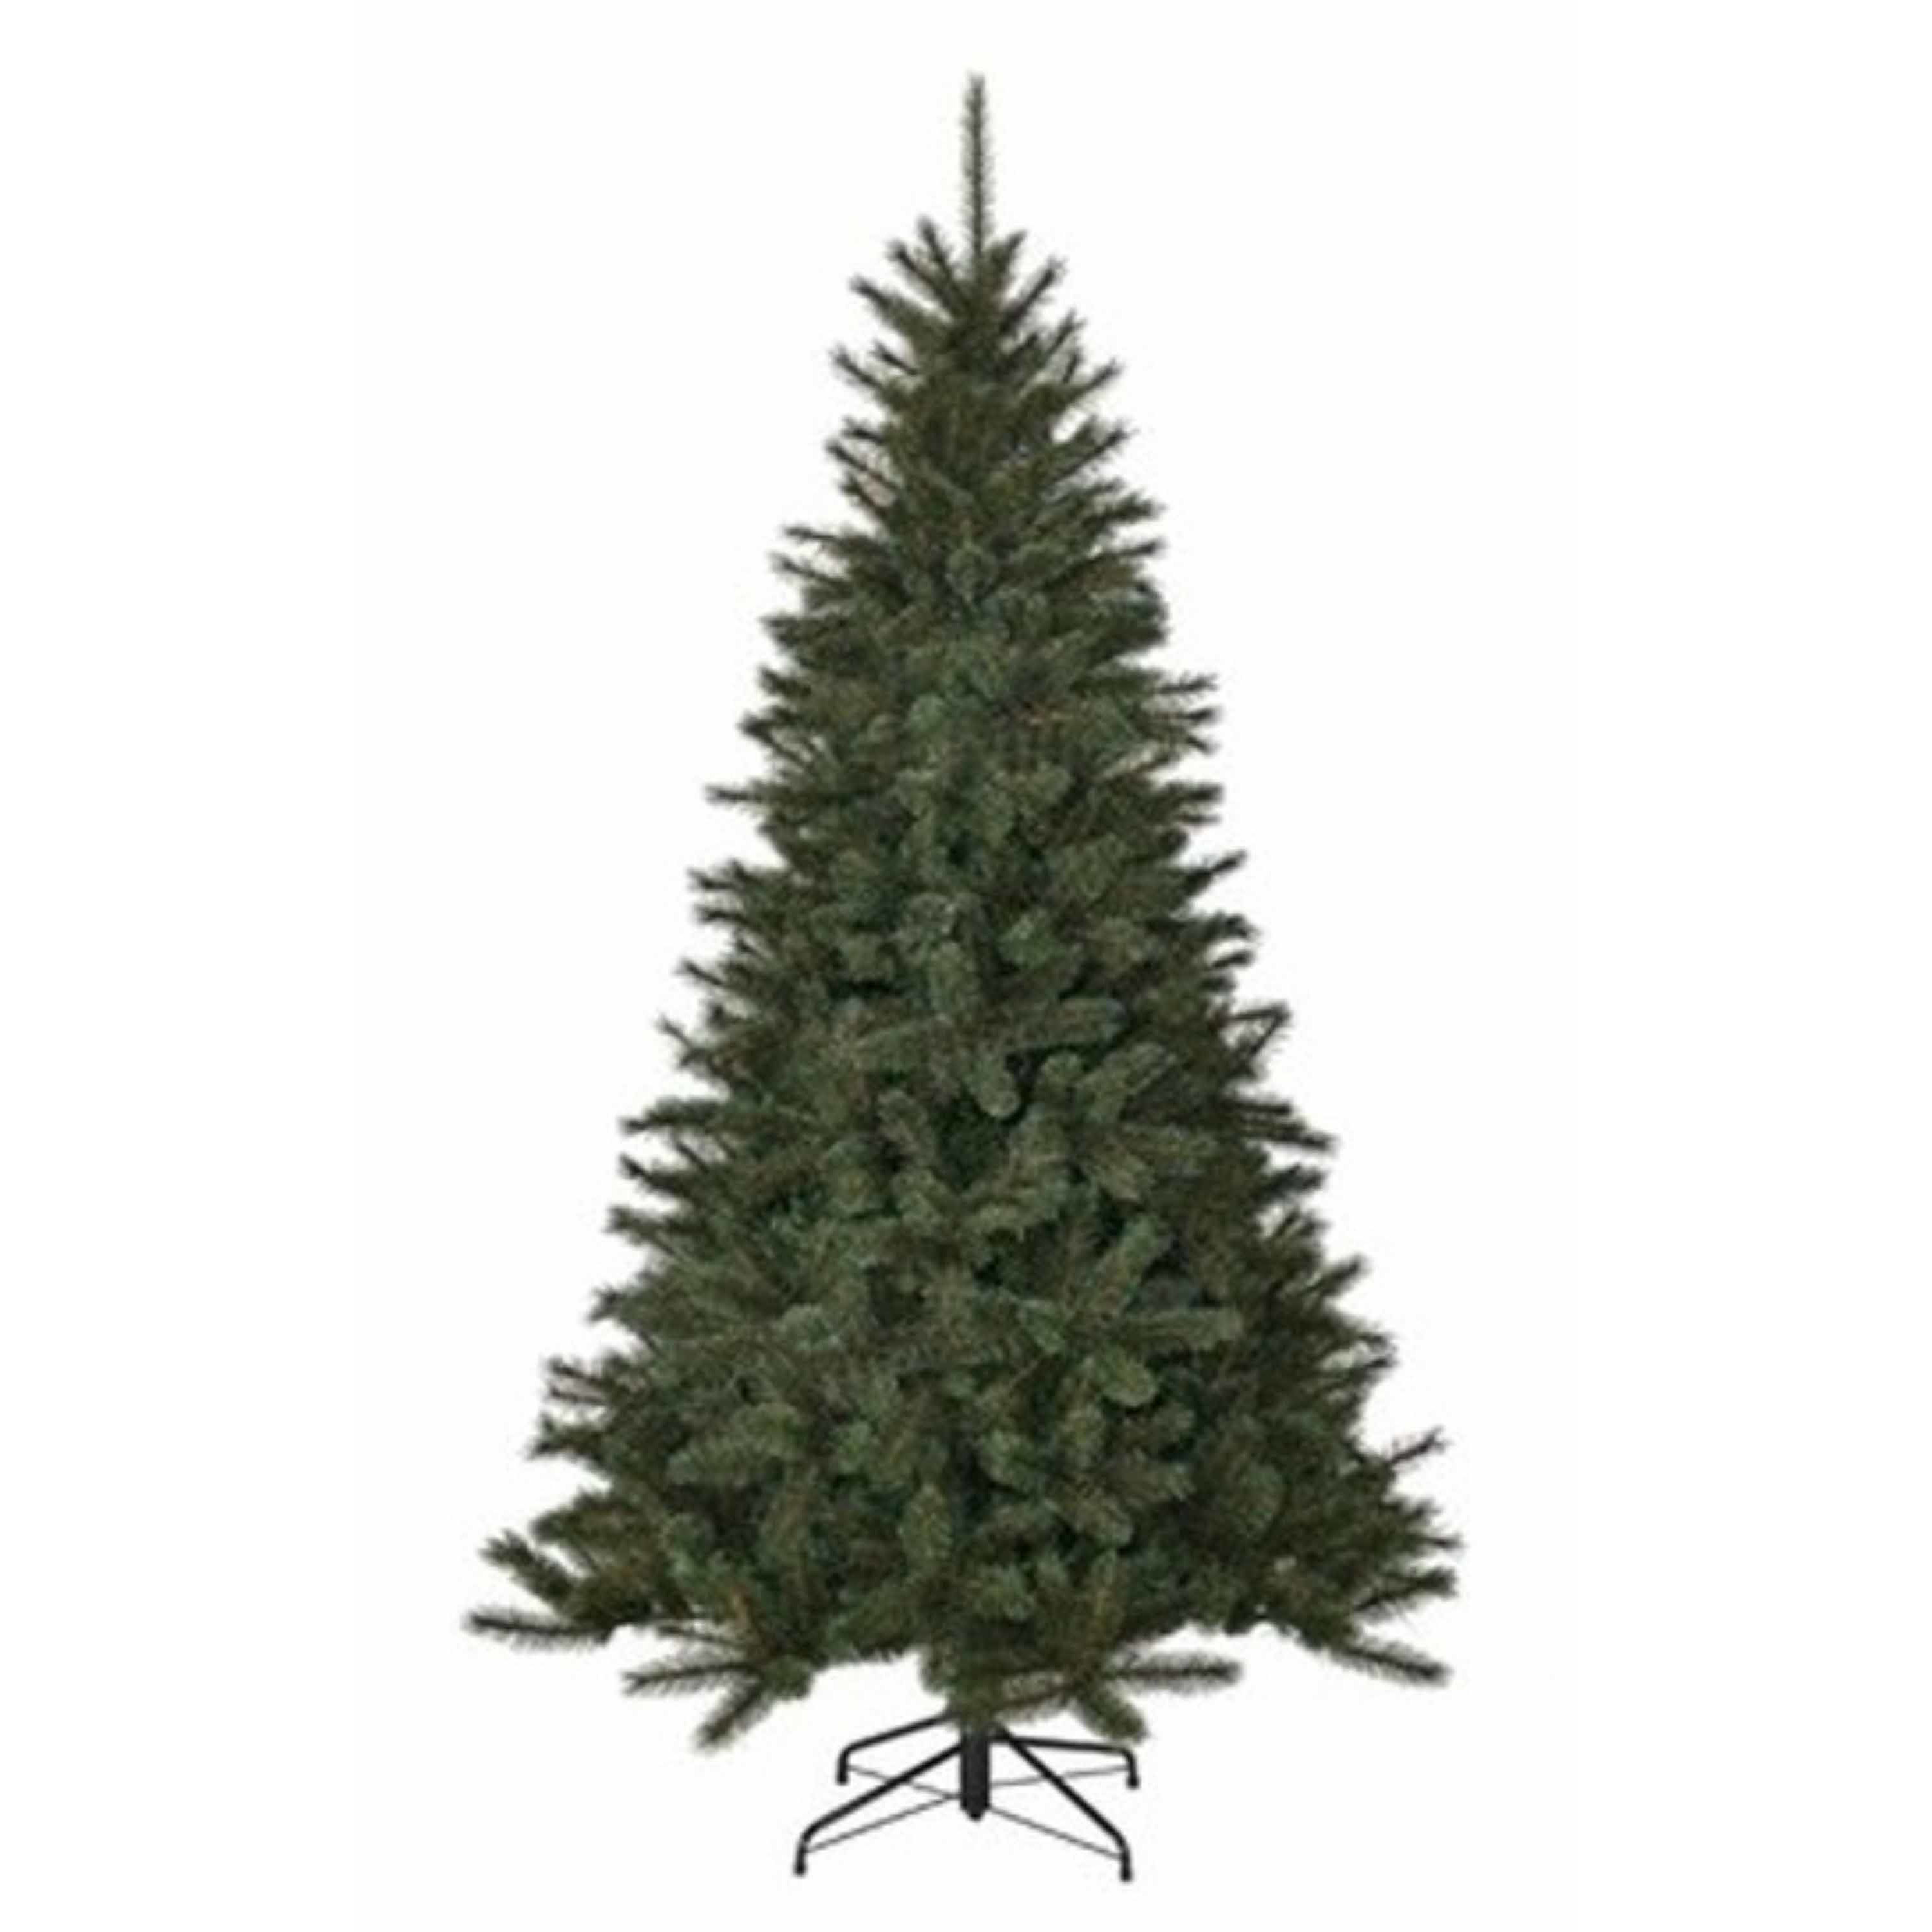 Black Box kunst kerstboom-kunstboom groen 155 cm 511 tips